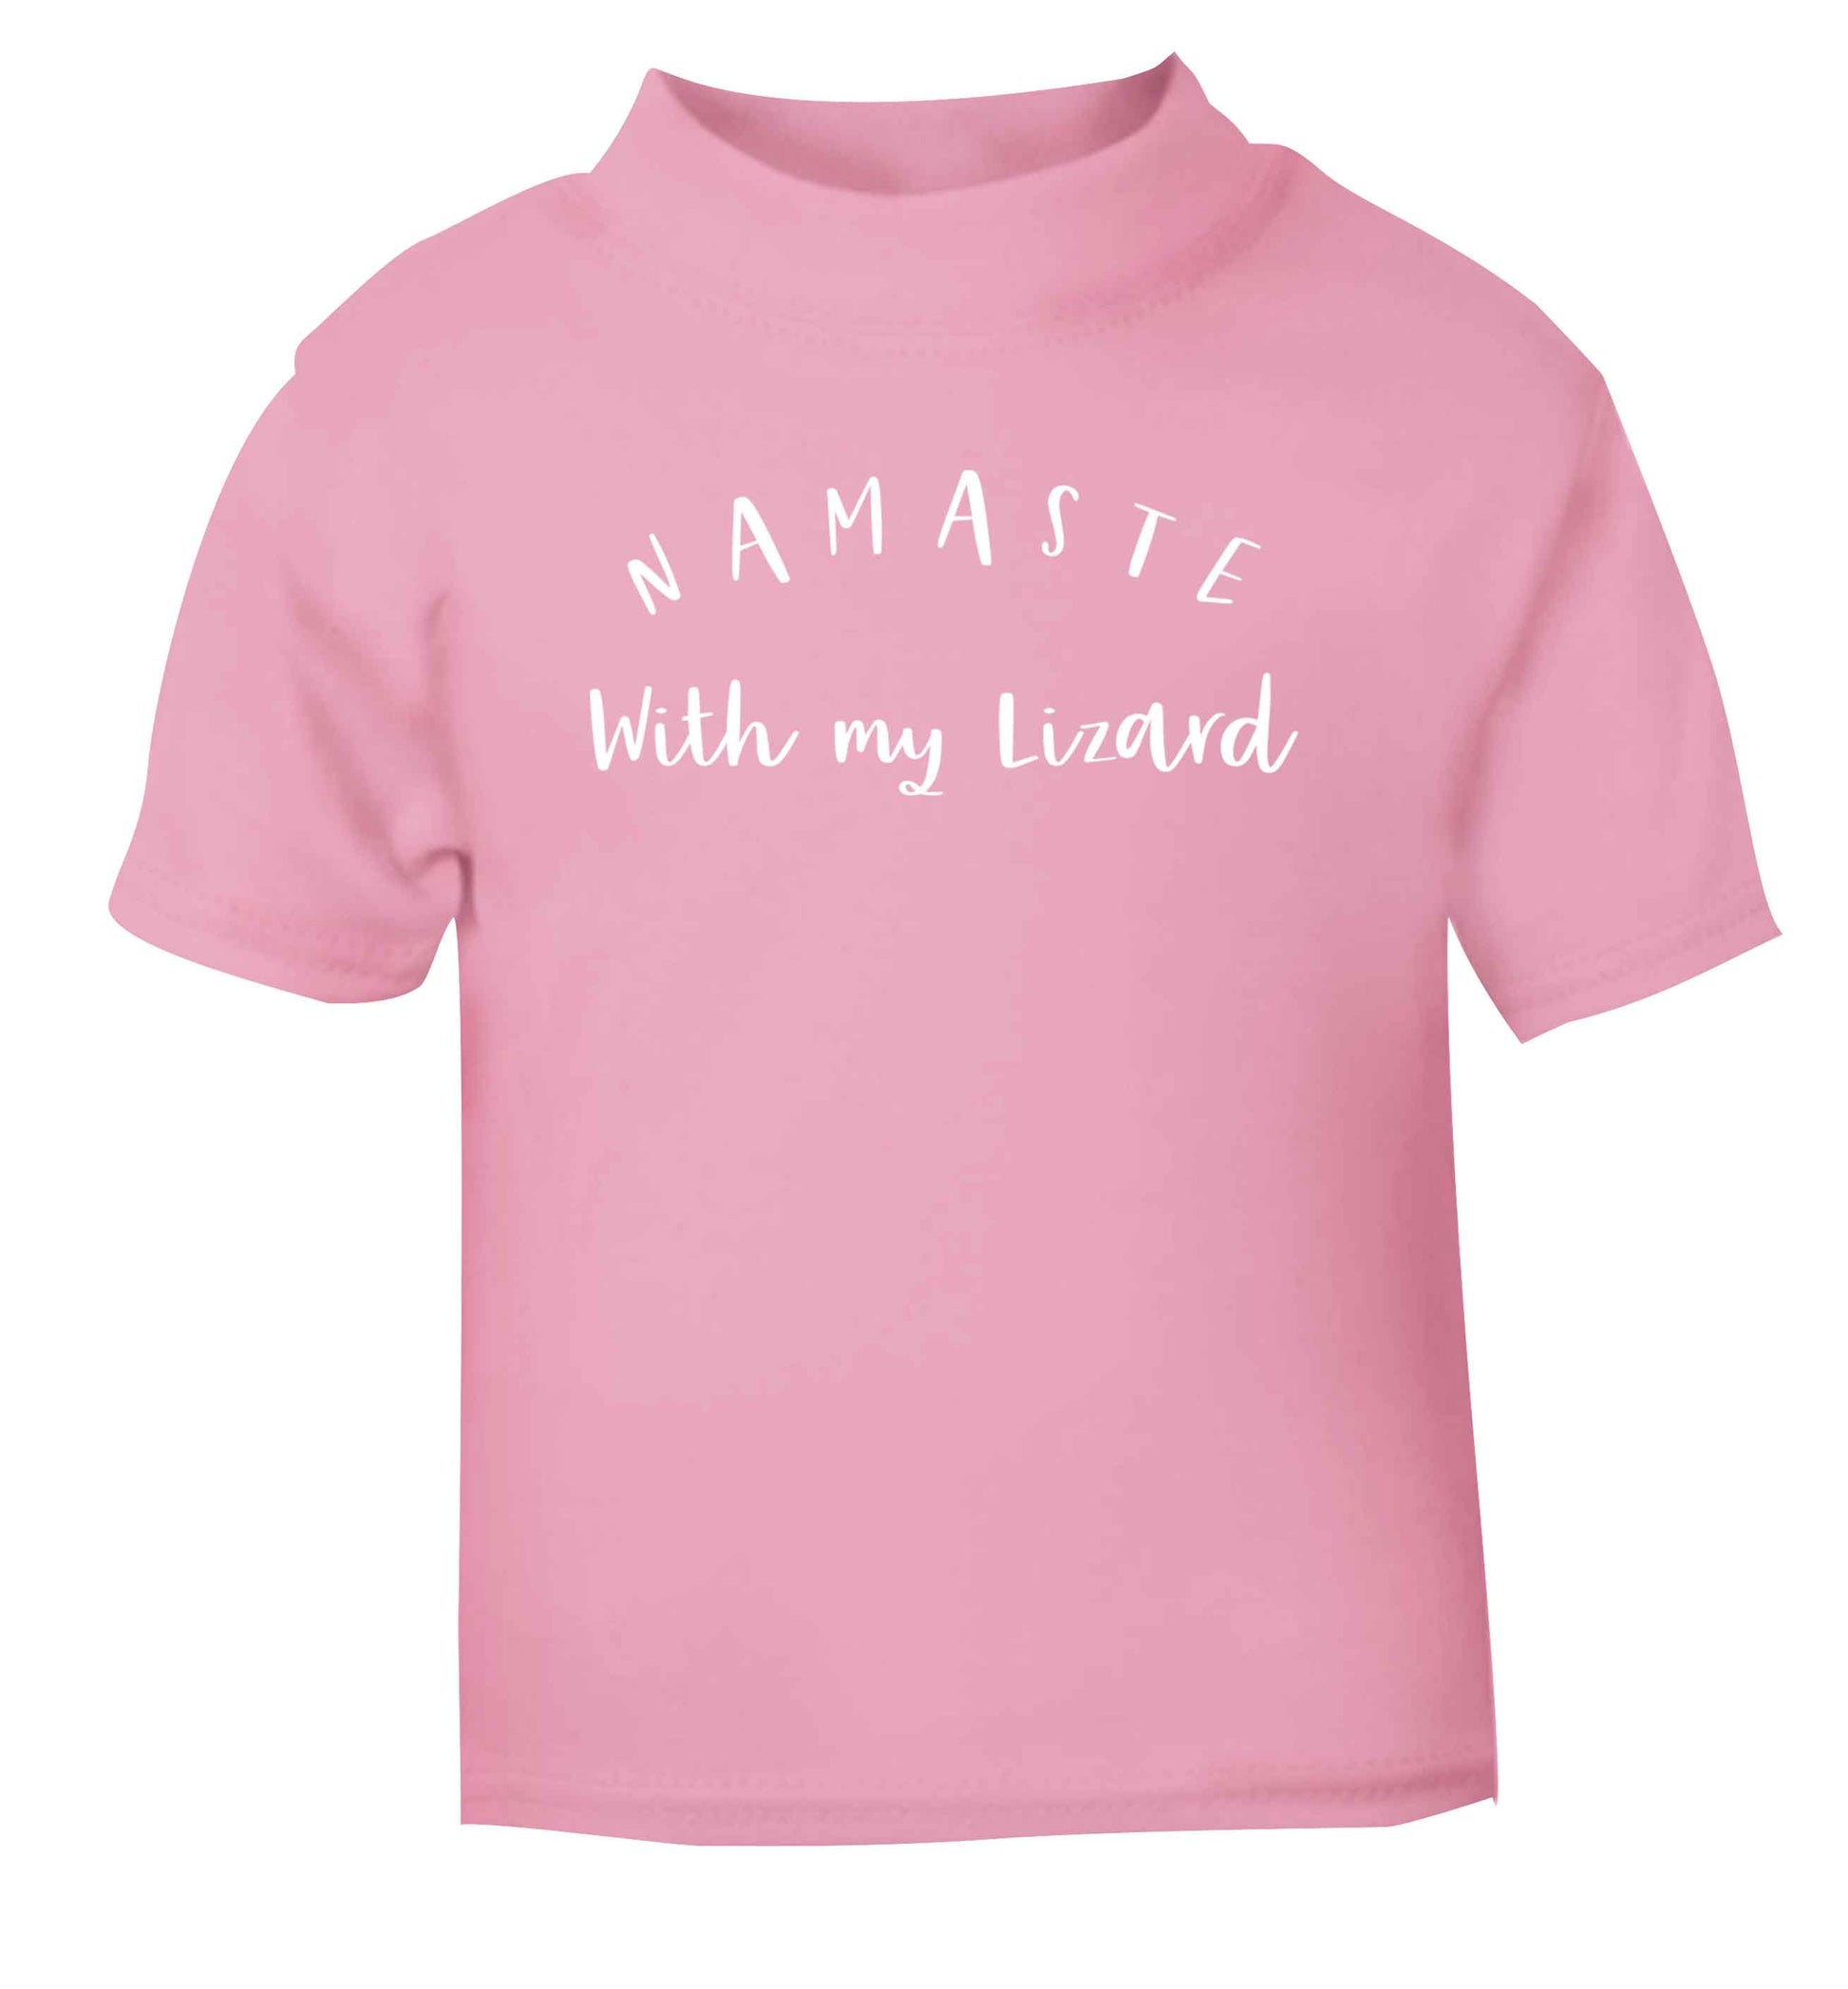 Namaste with my lizard light pink Baby Toddler Tshirt 2 Years